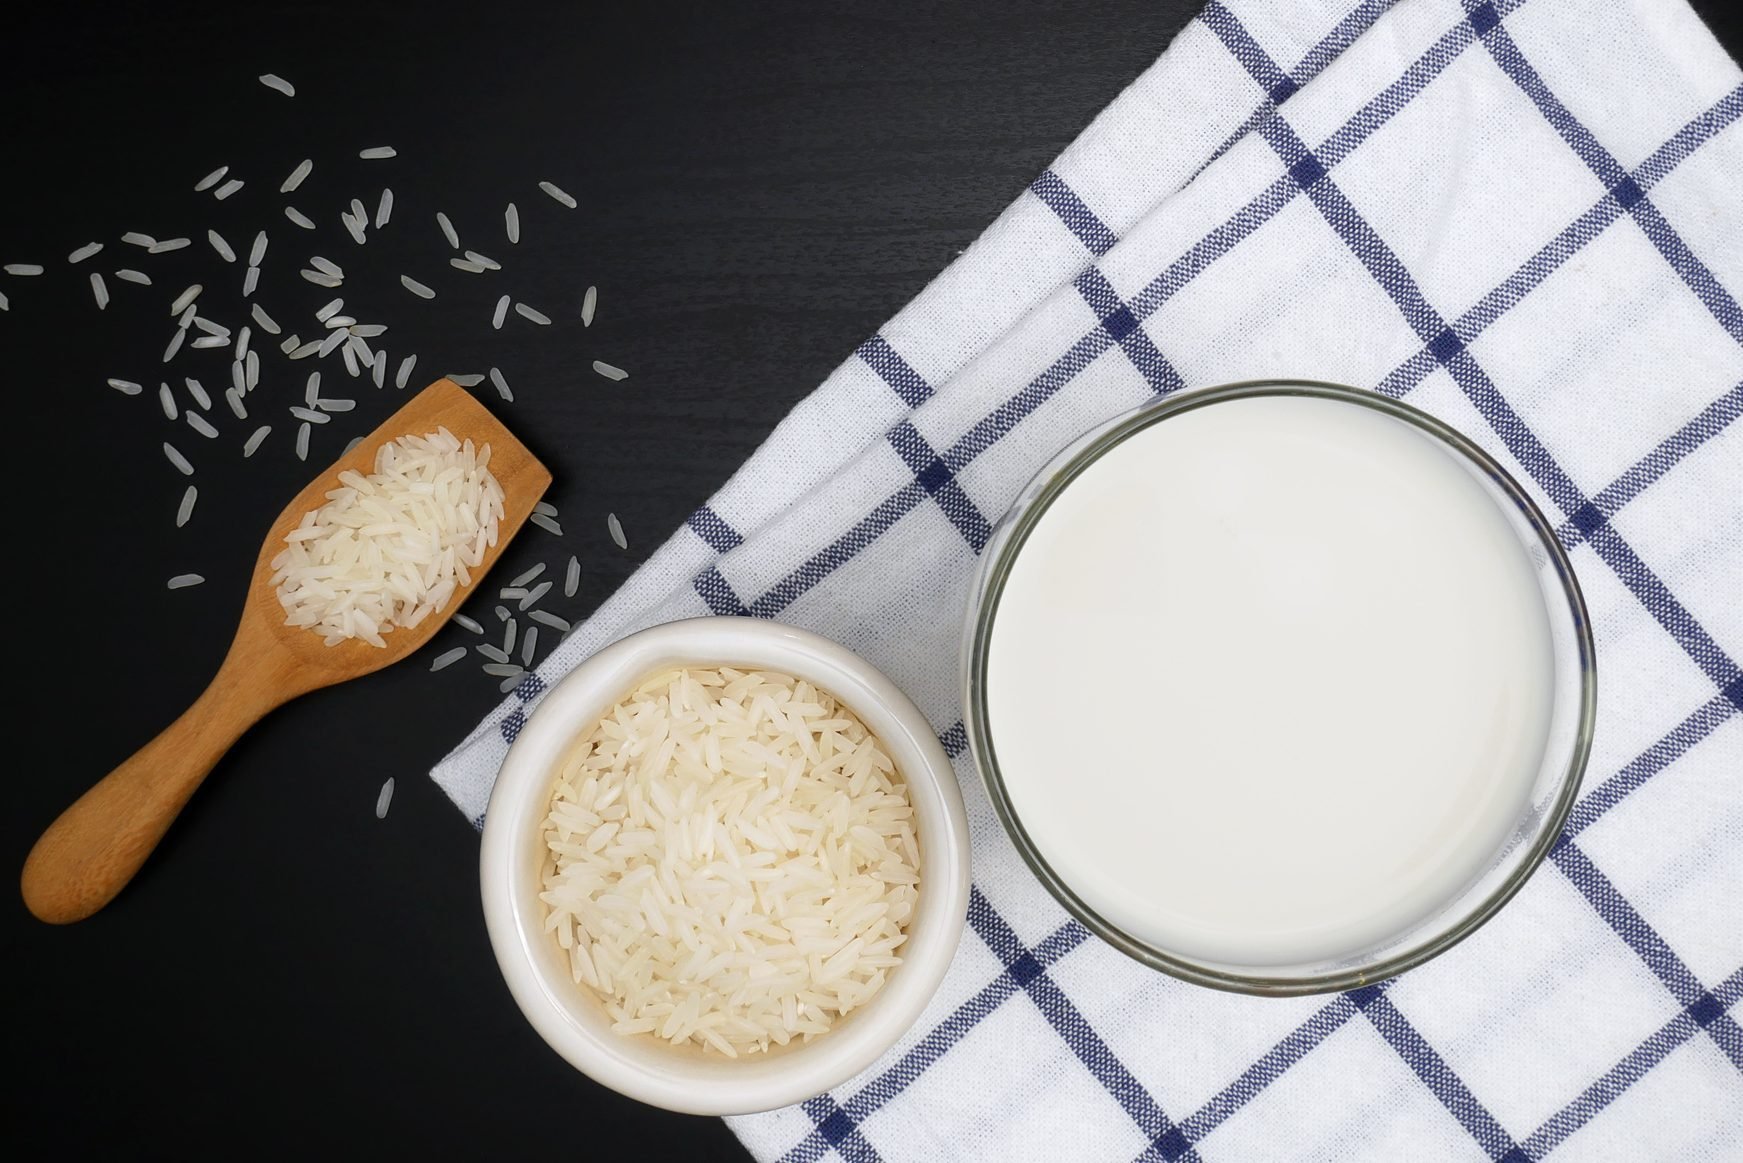 شیر و برنج روی میز سیاه